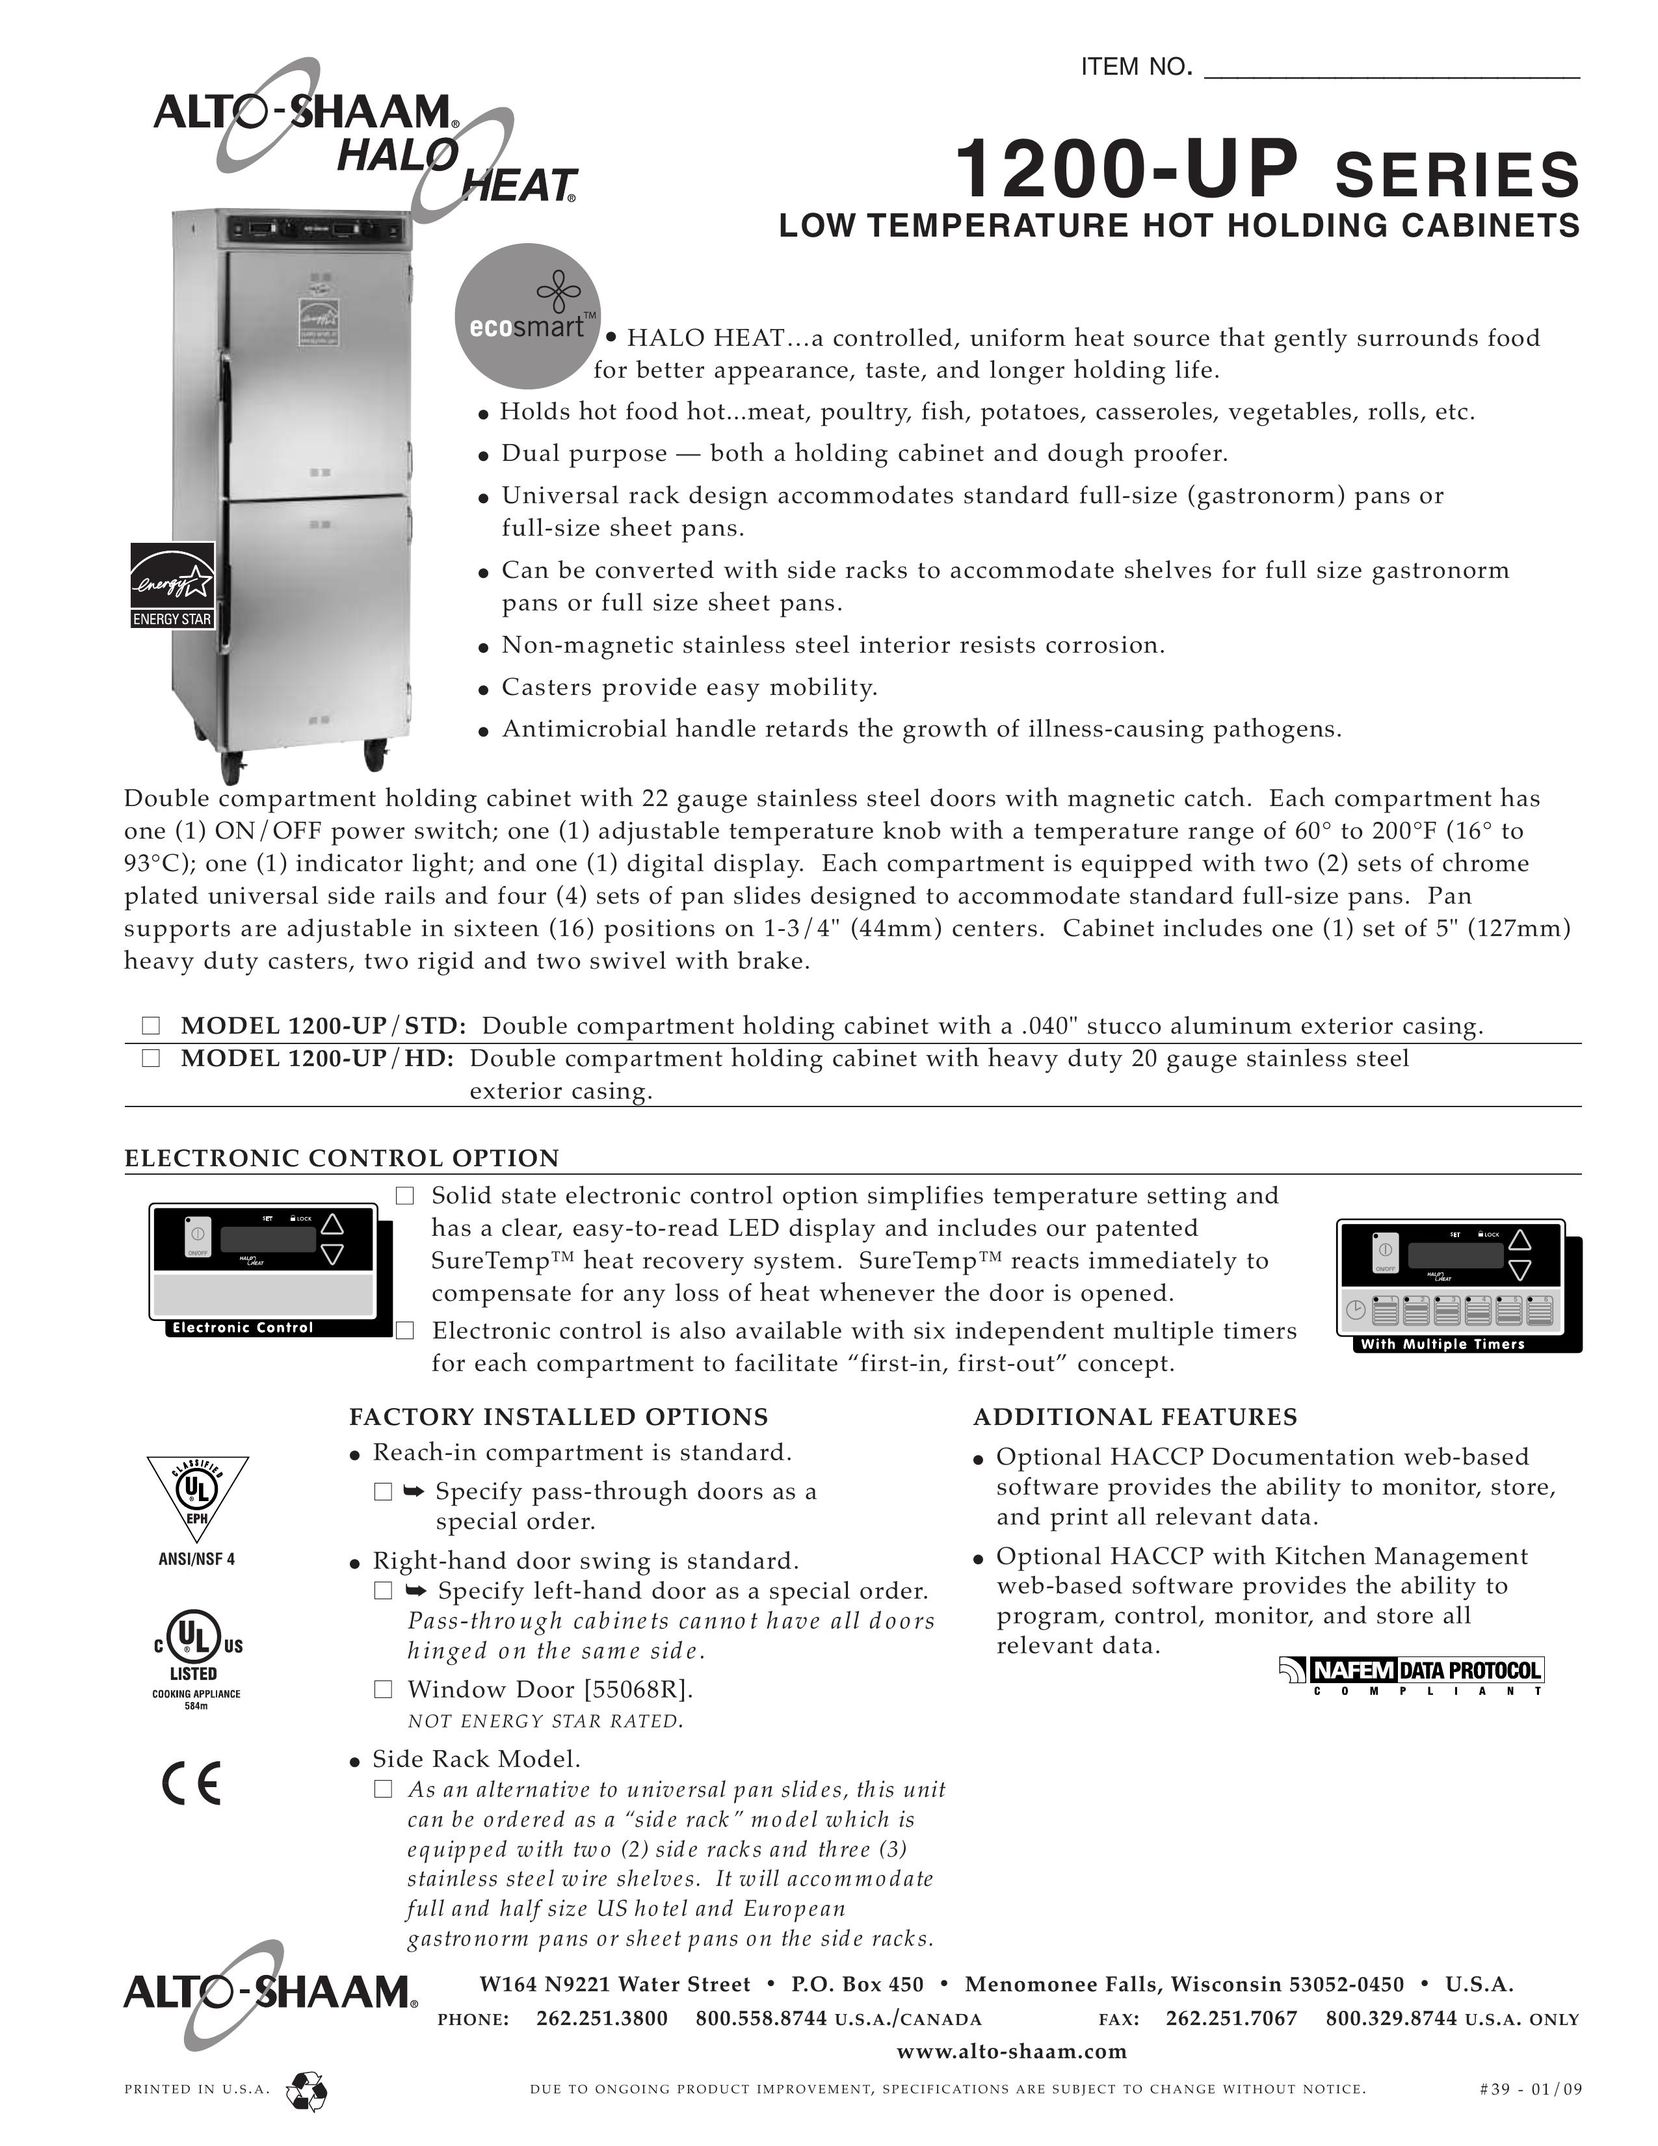 Alto-Shaam 1200-UP/STD Kitchen Entertainment Center User Manual